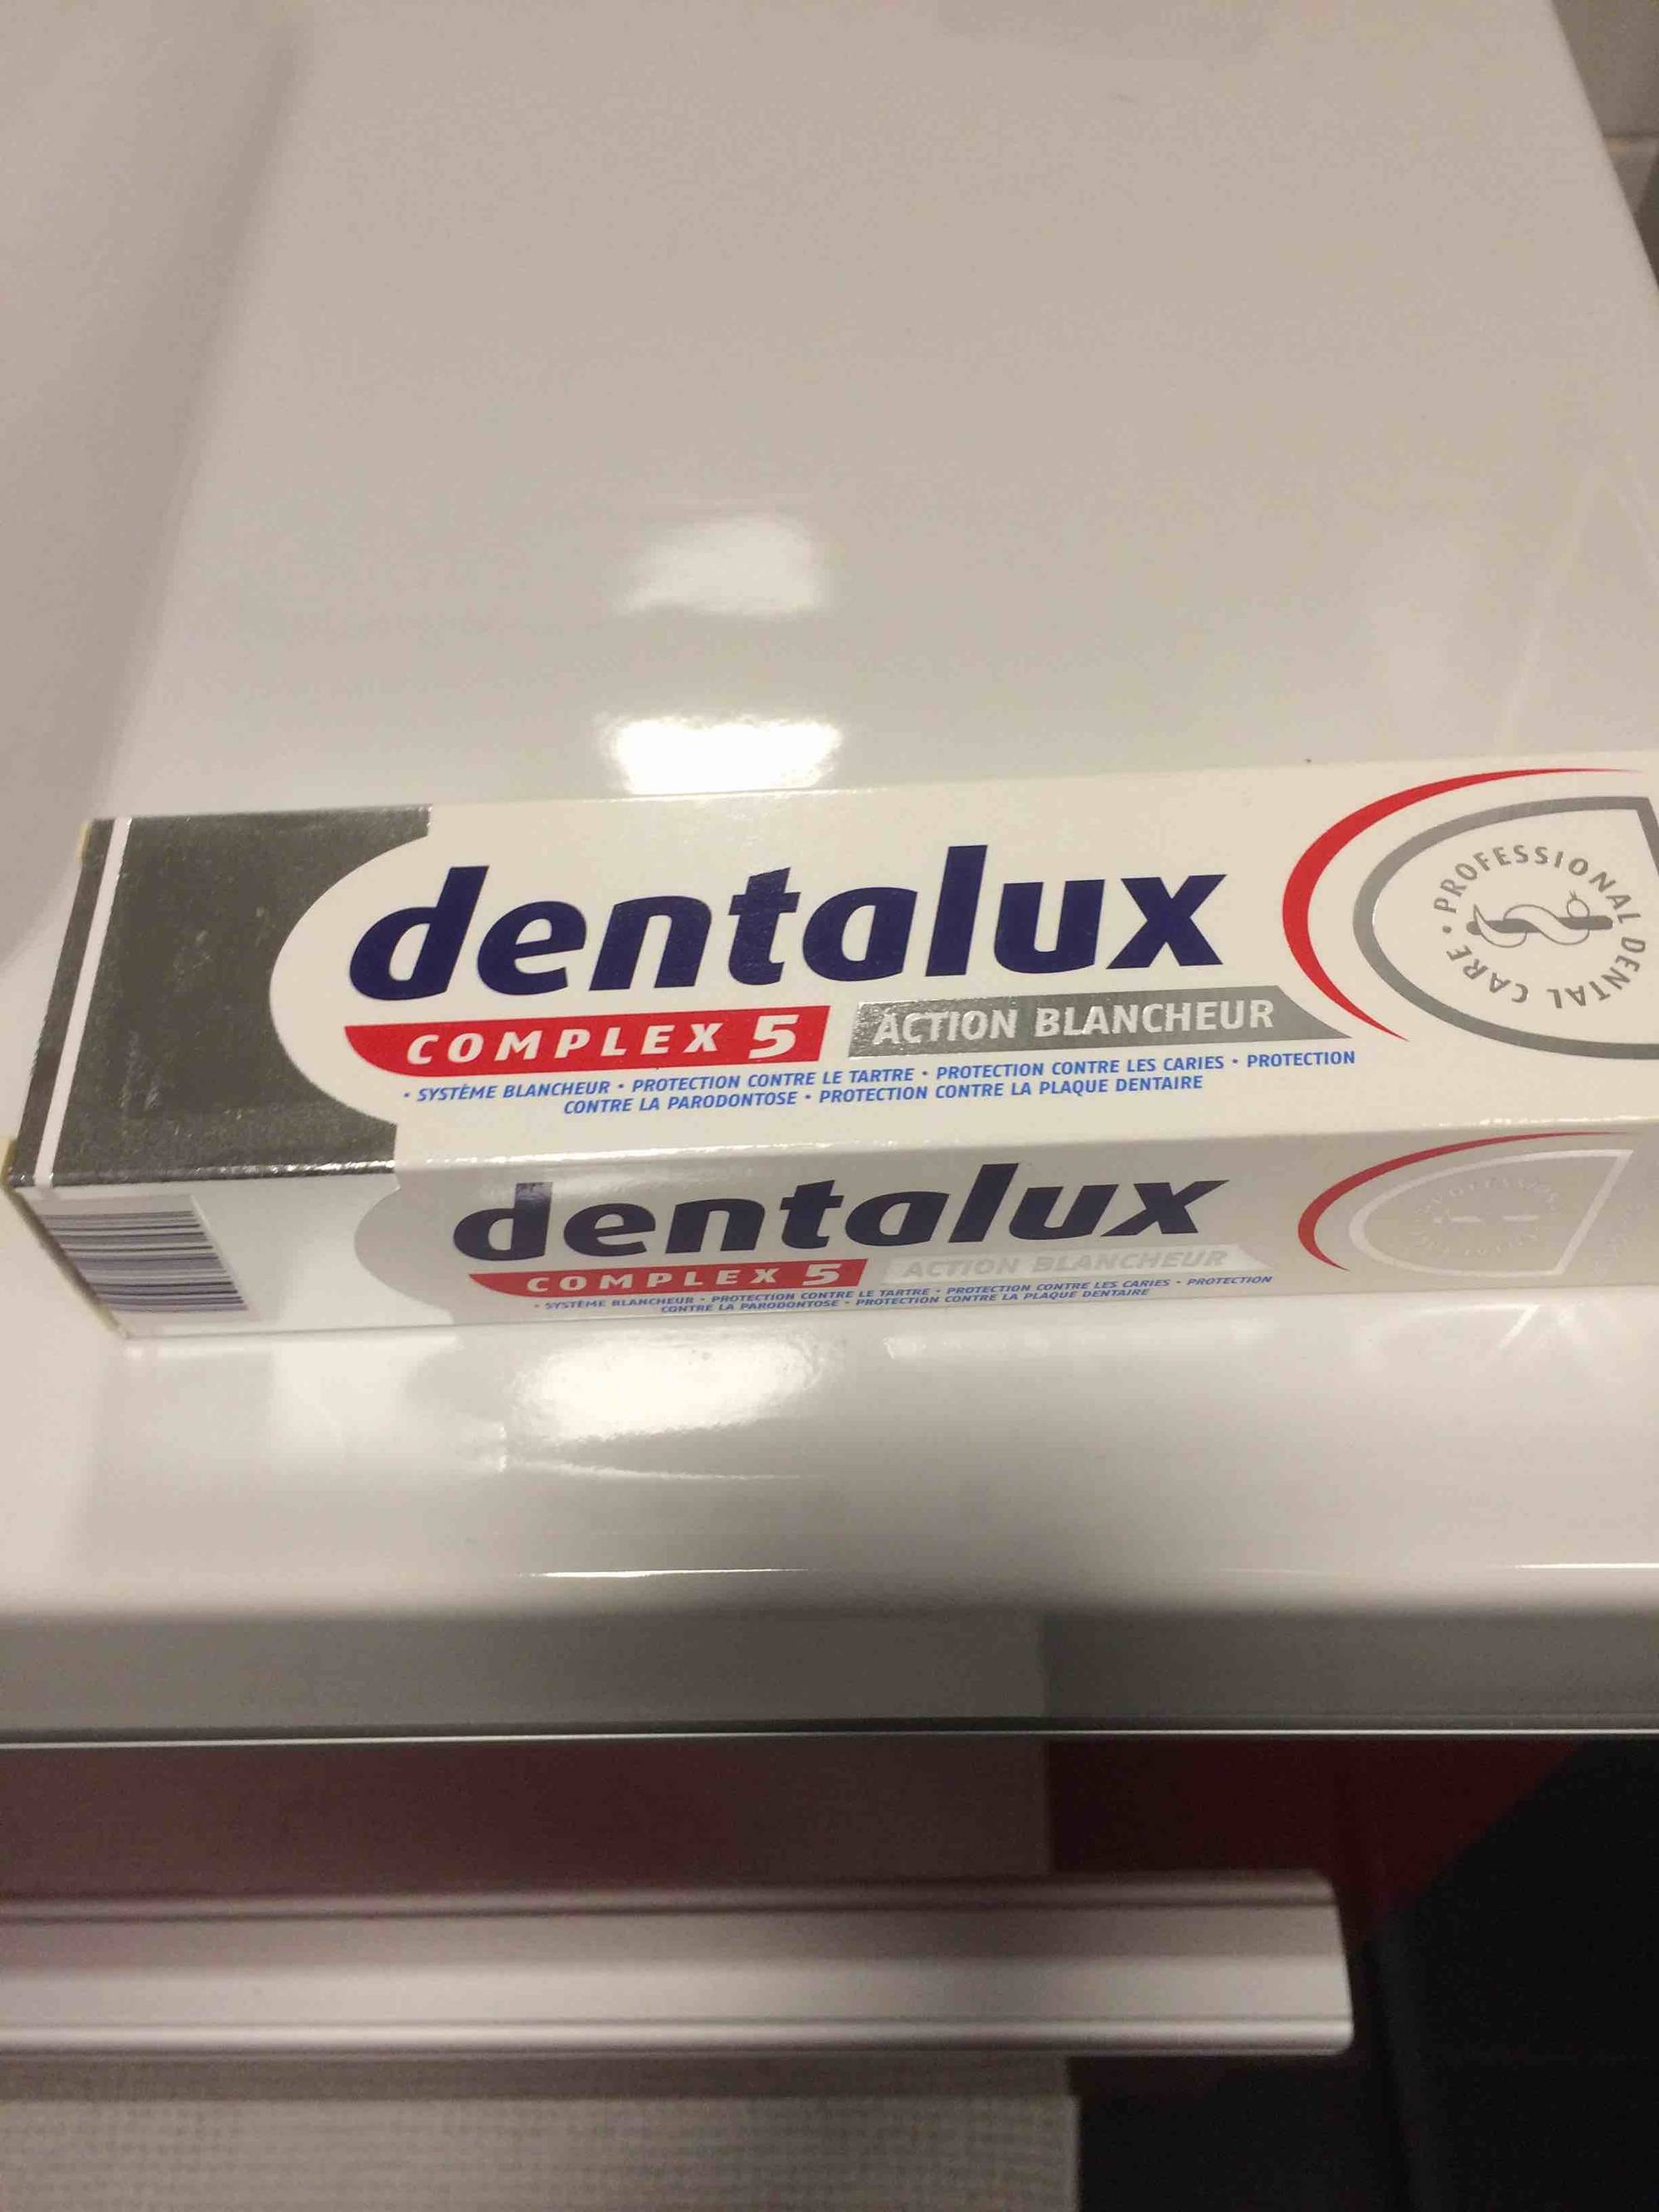 DENTALUX - Dentifrice Complex 5 - Action blancheur